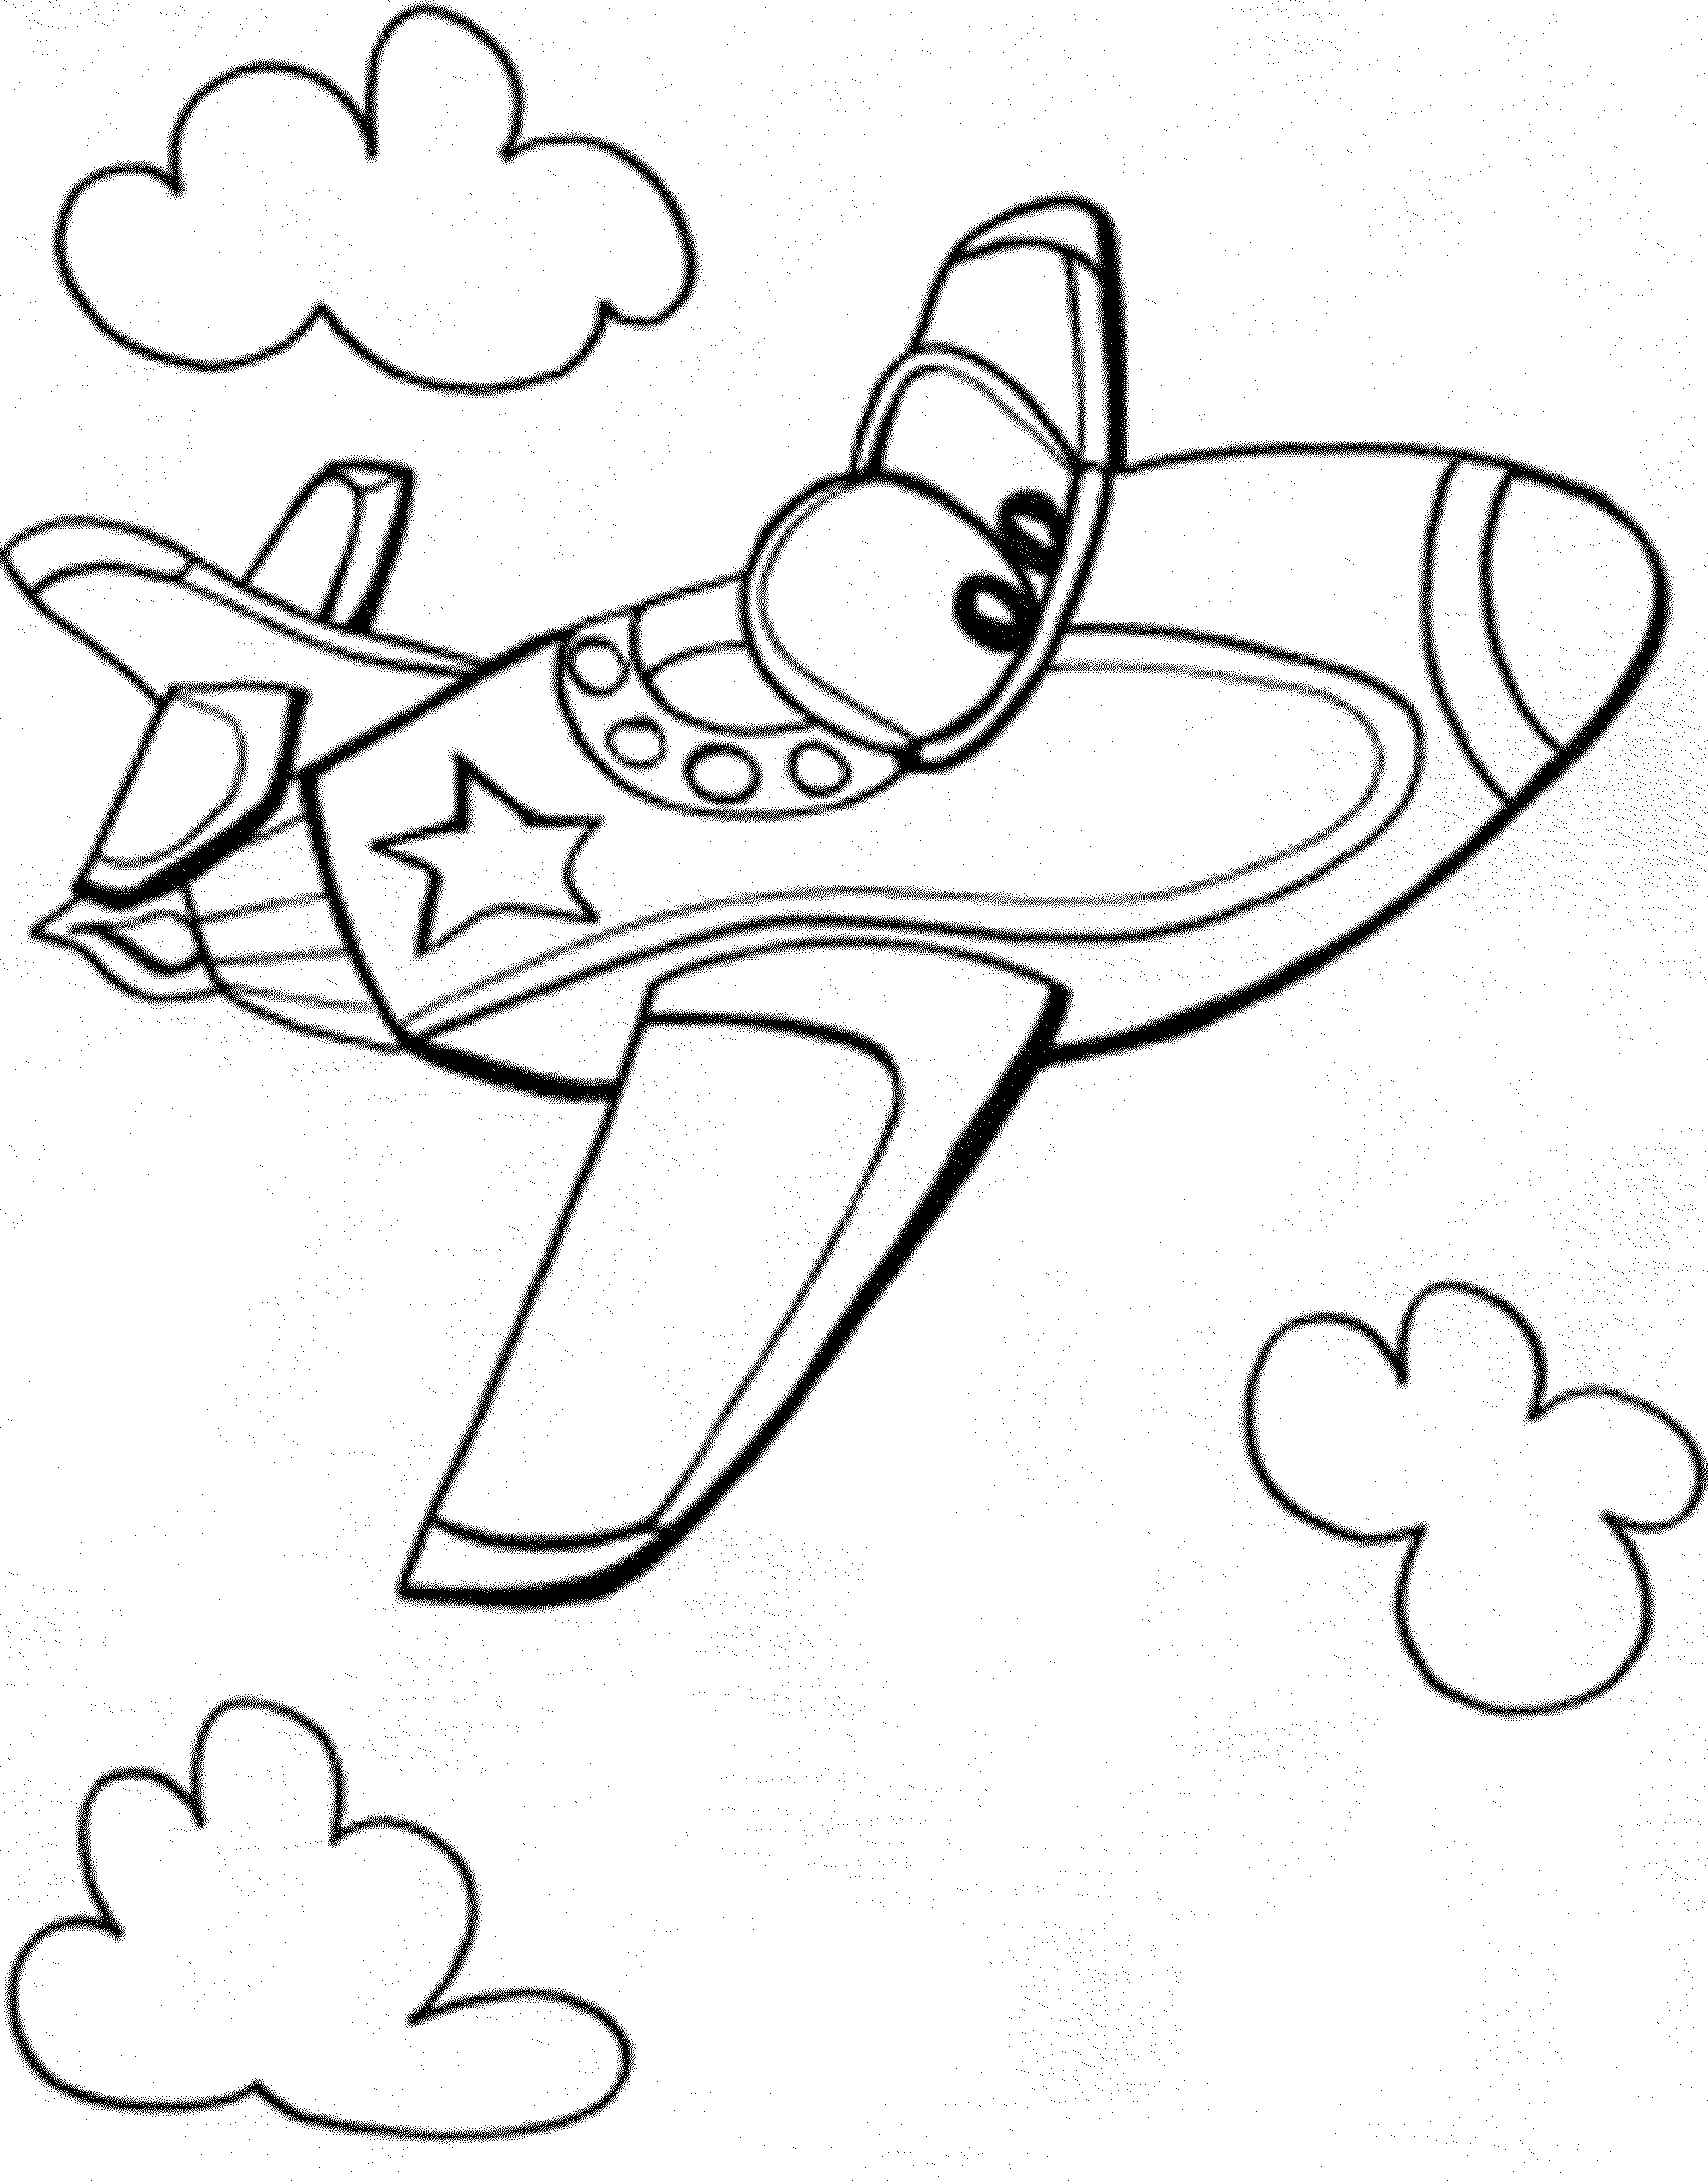 coloring page airplane free printable airplane coloring pages for kids coloring page airplane 